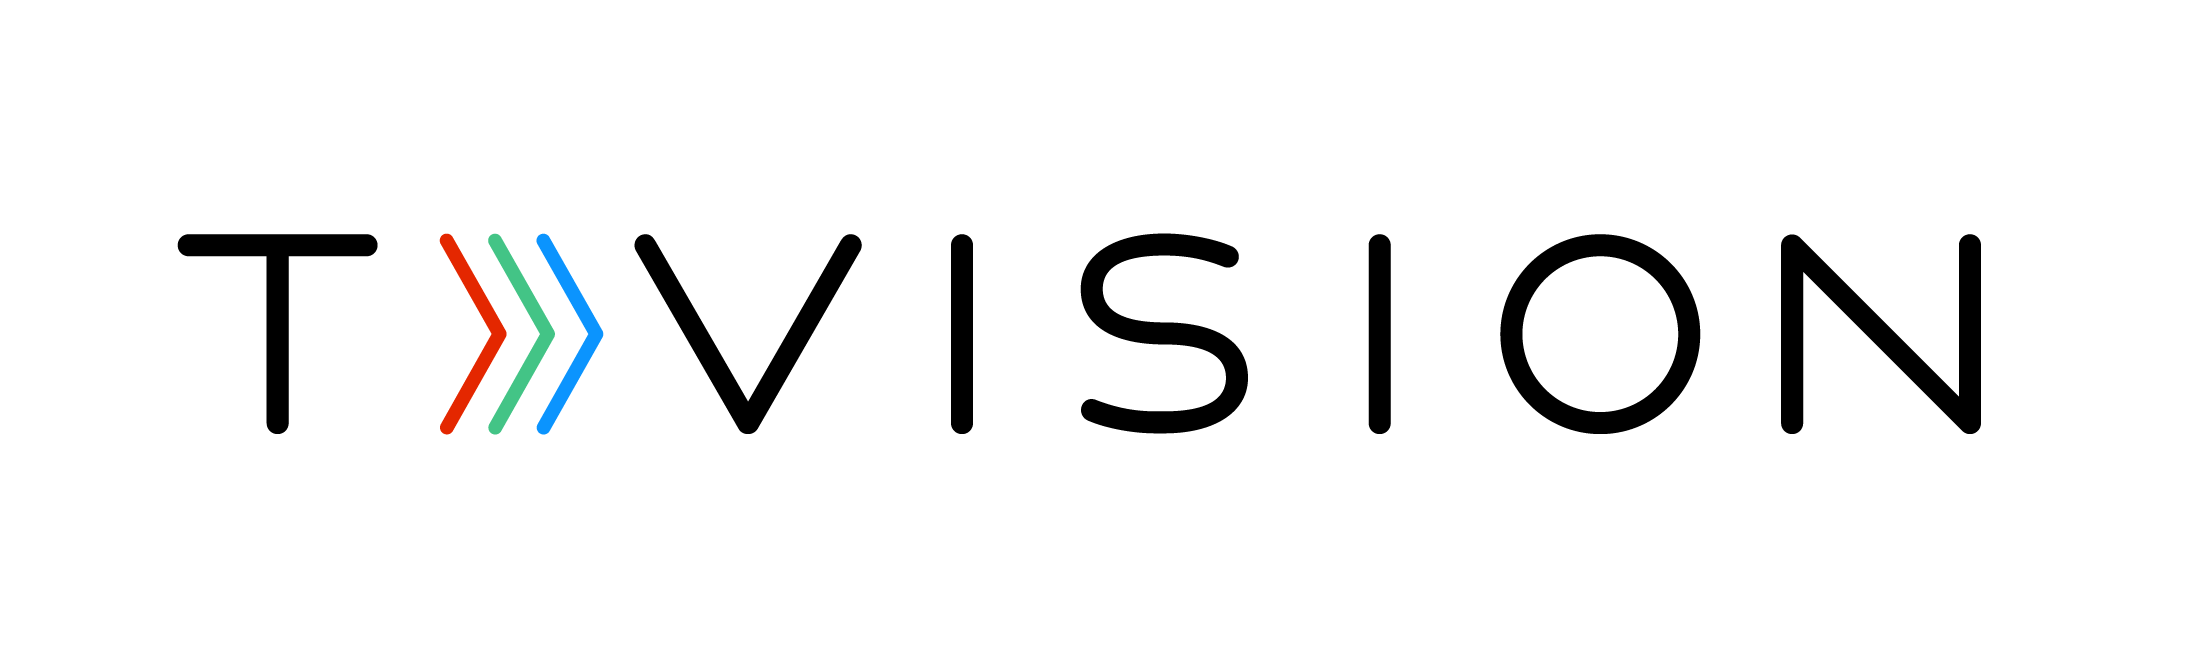 TVision Logo